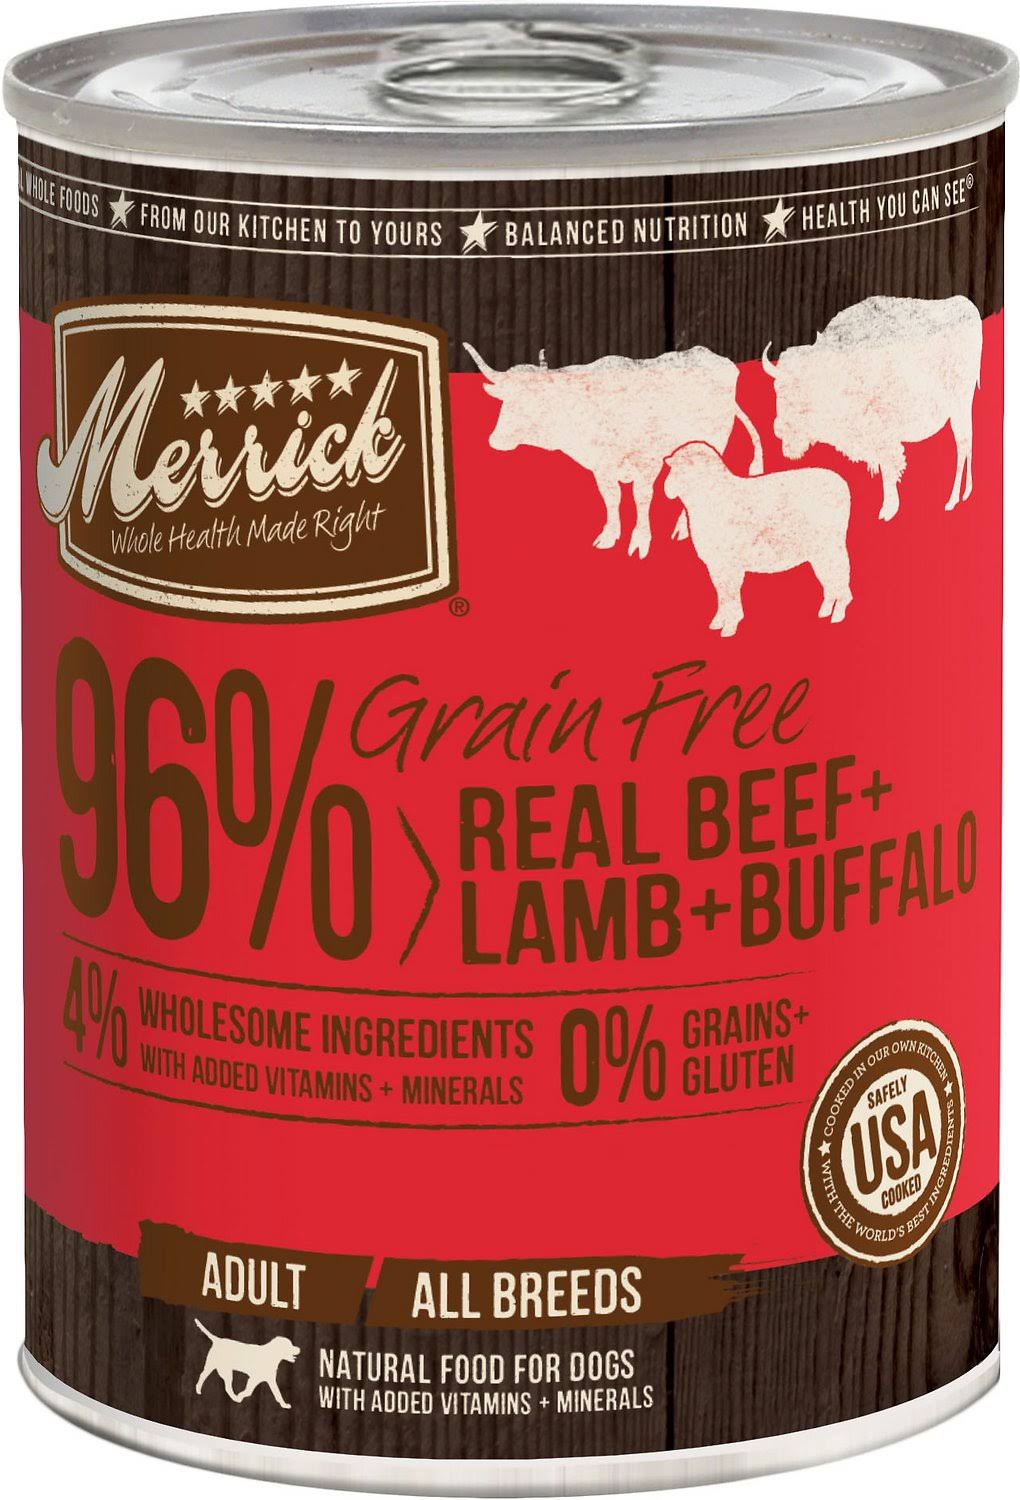 Merrick Grain-Free Real Beef, Lamb & Buffalo Canned Dog Food, 12.7-oz